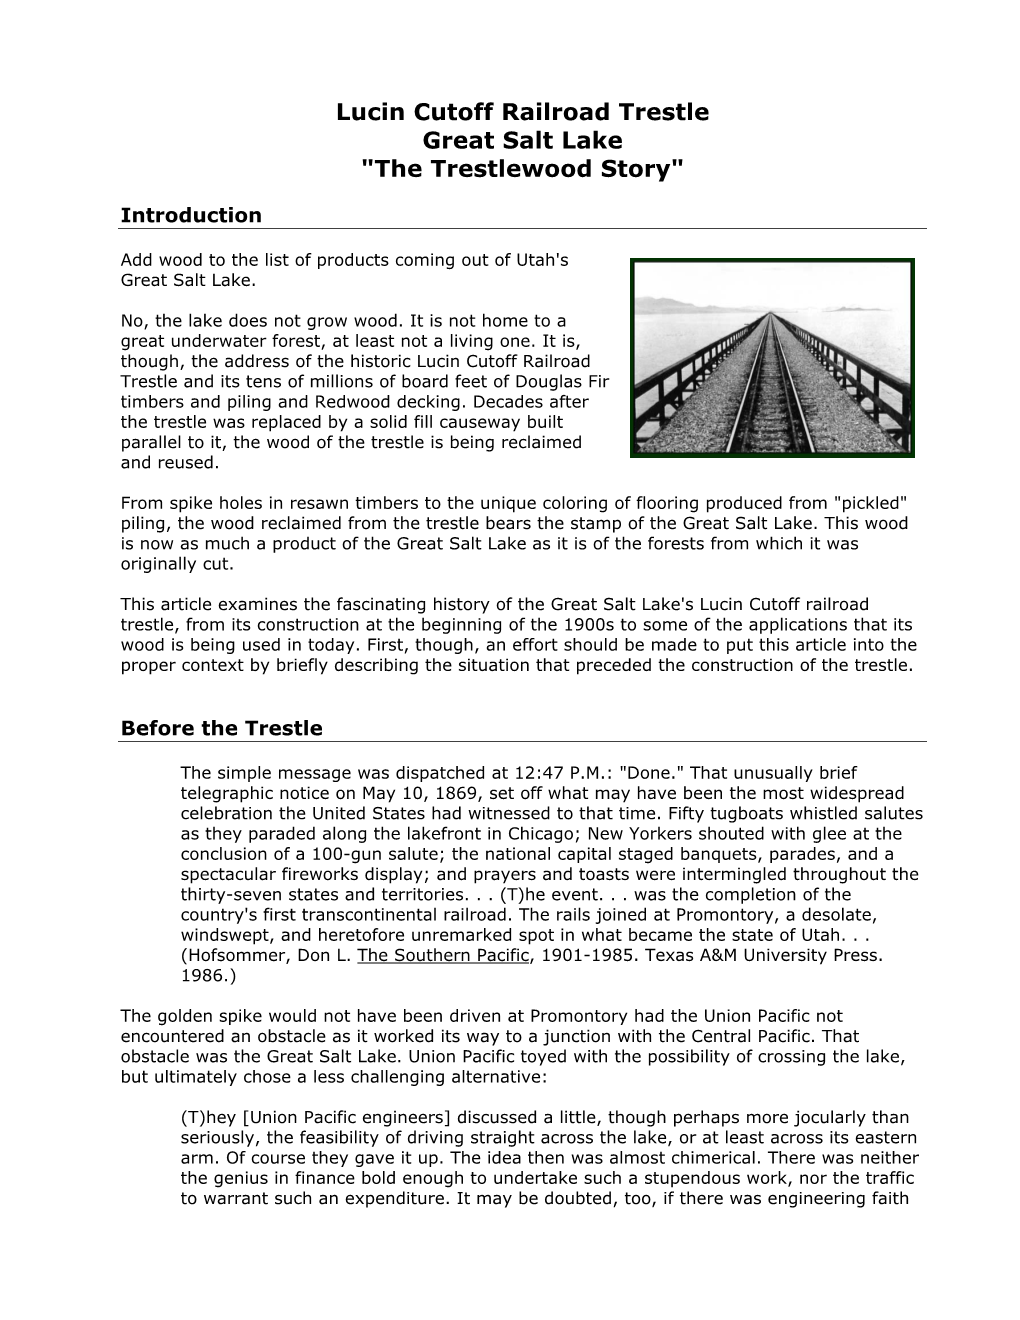 Lucin Cutoff Railroad Trestle Great Salt Lake "The Trestlewood Story"